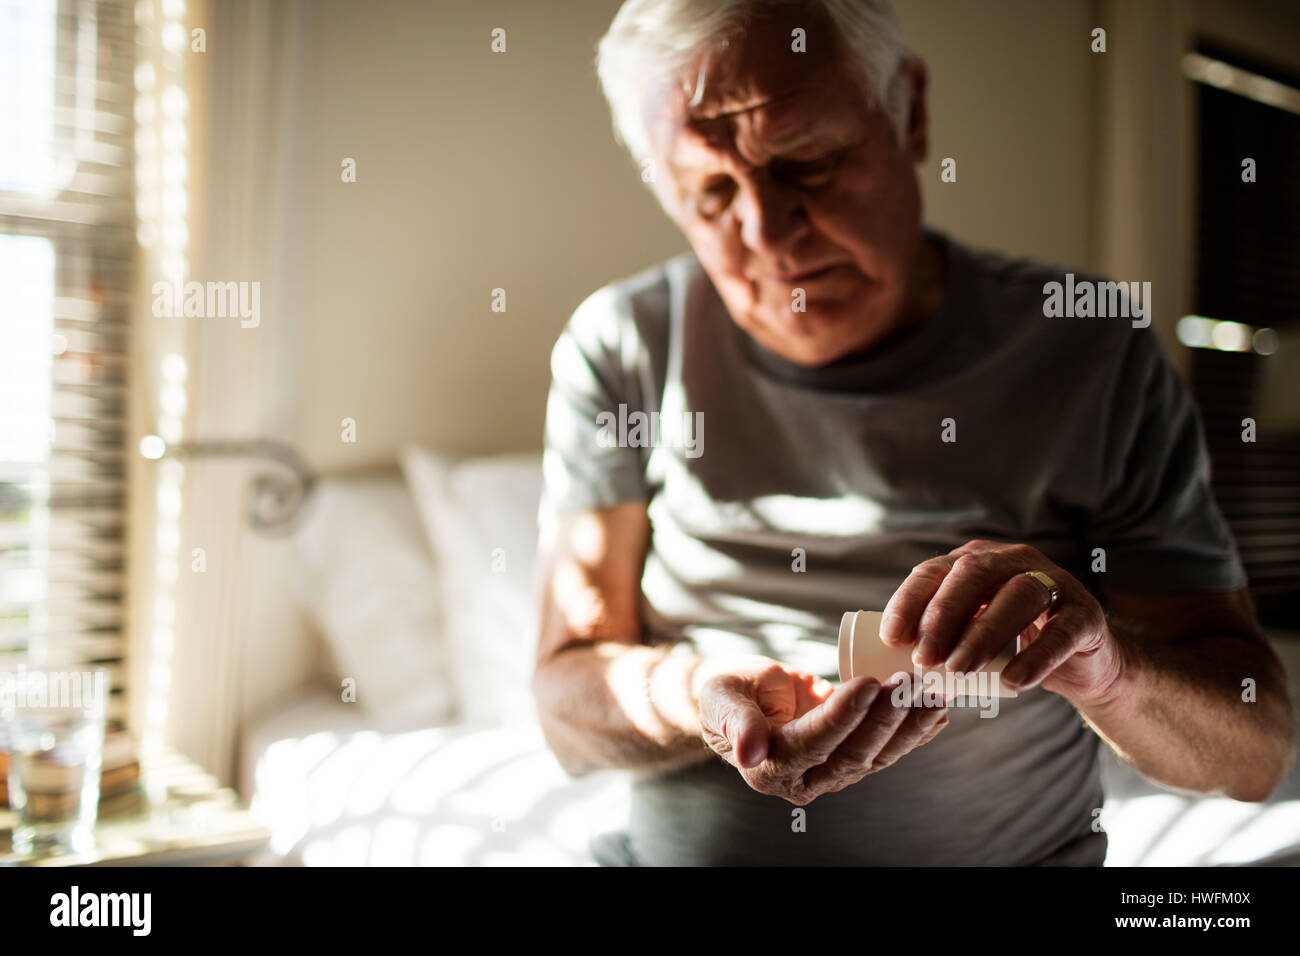 Senior man taking medicine in the bedroom at home Stock Photo